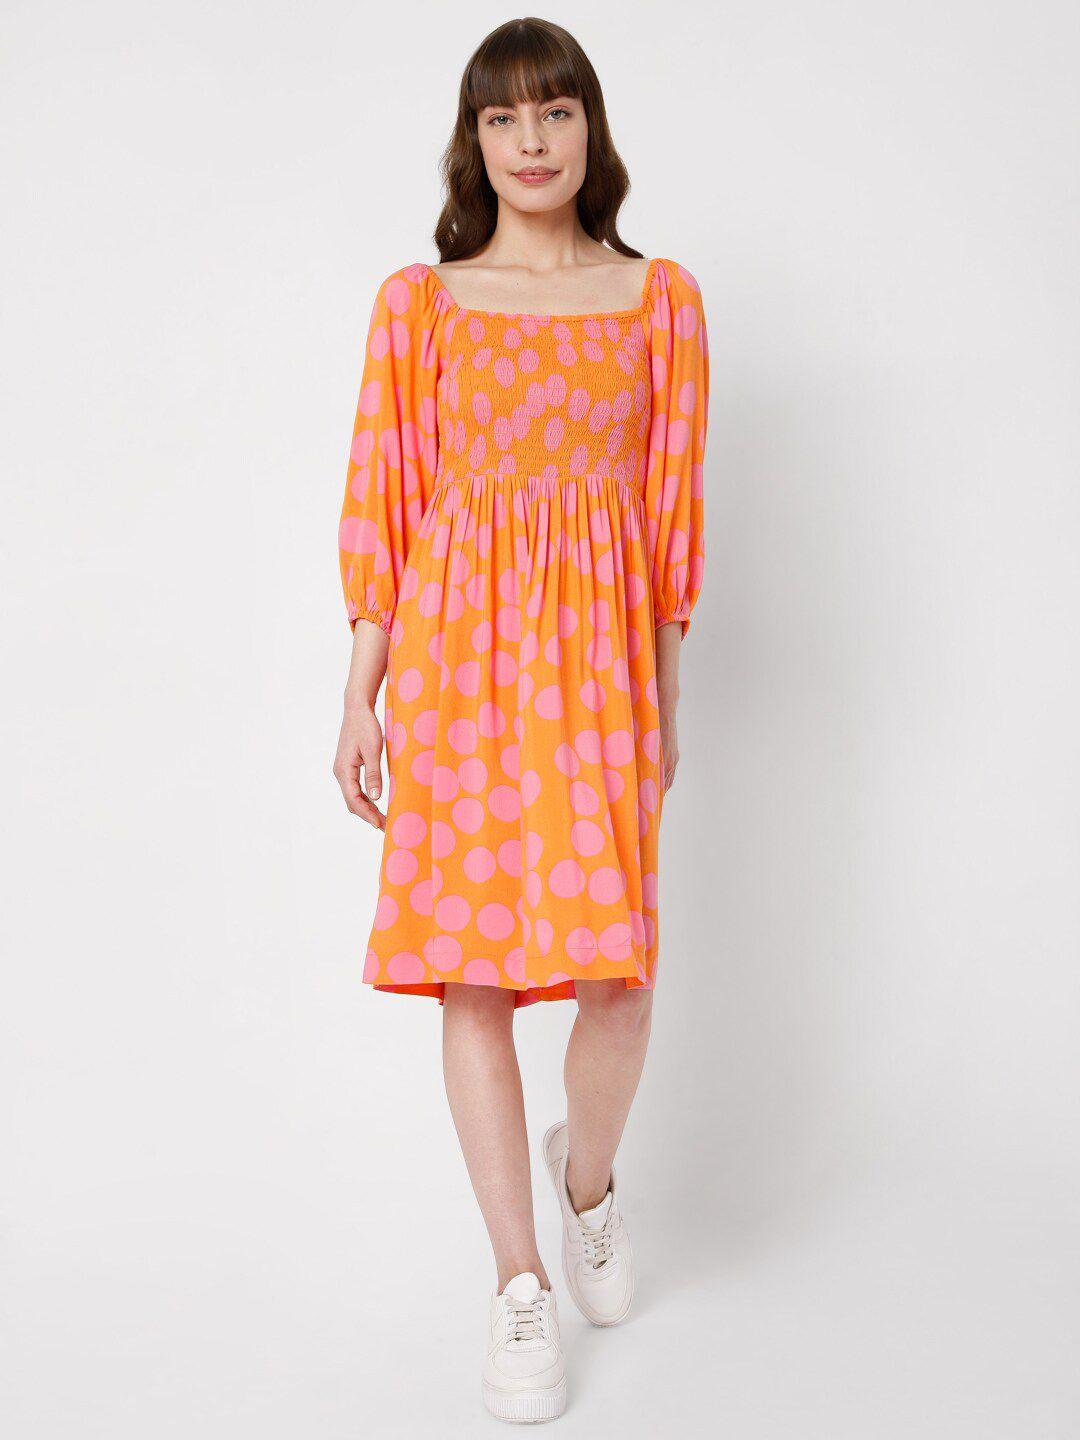 vero moda women orange & pink polka dot printed midi dress